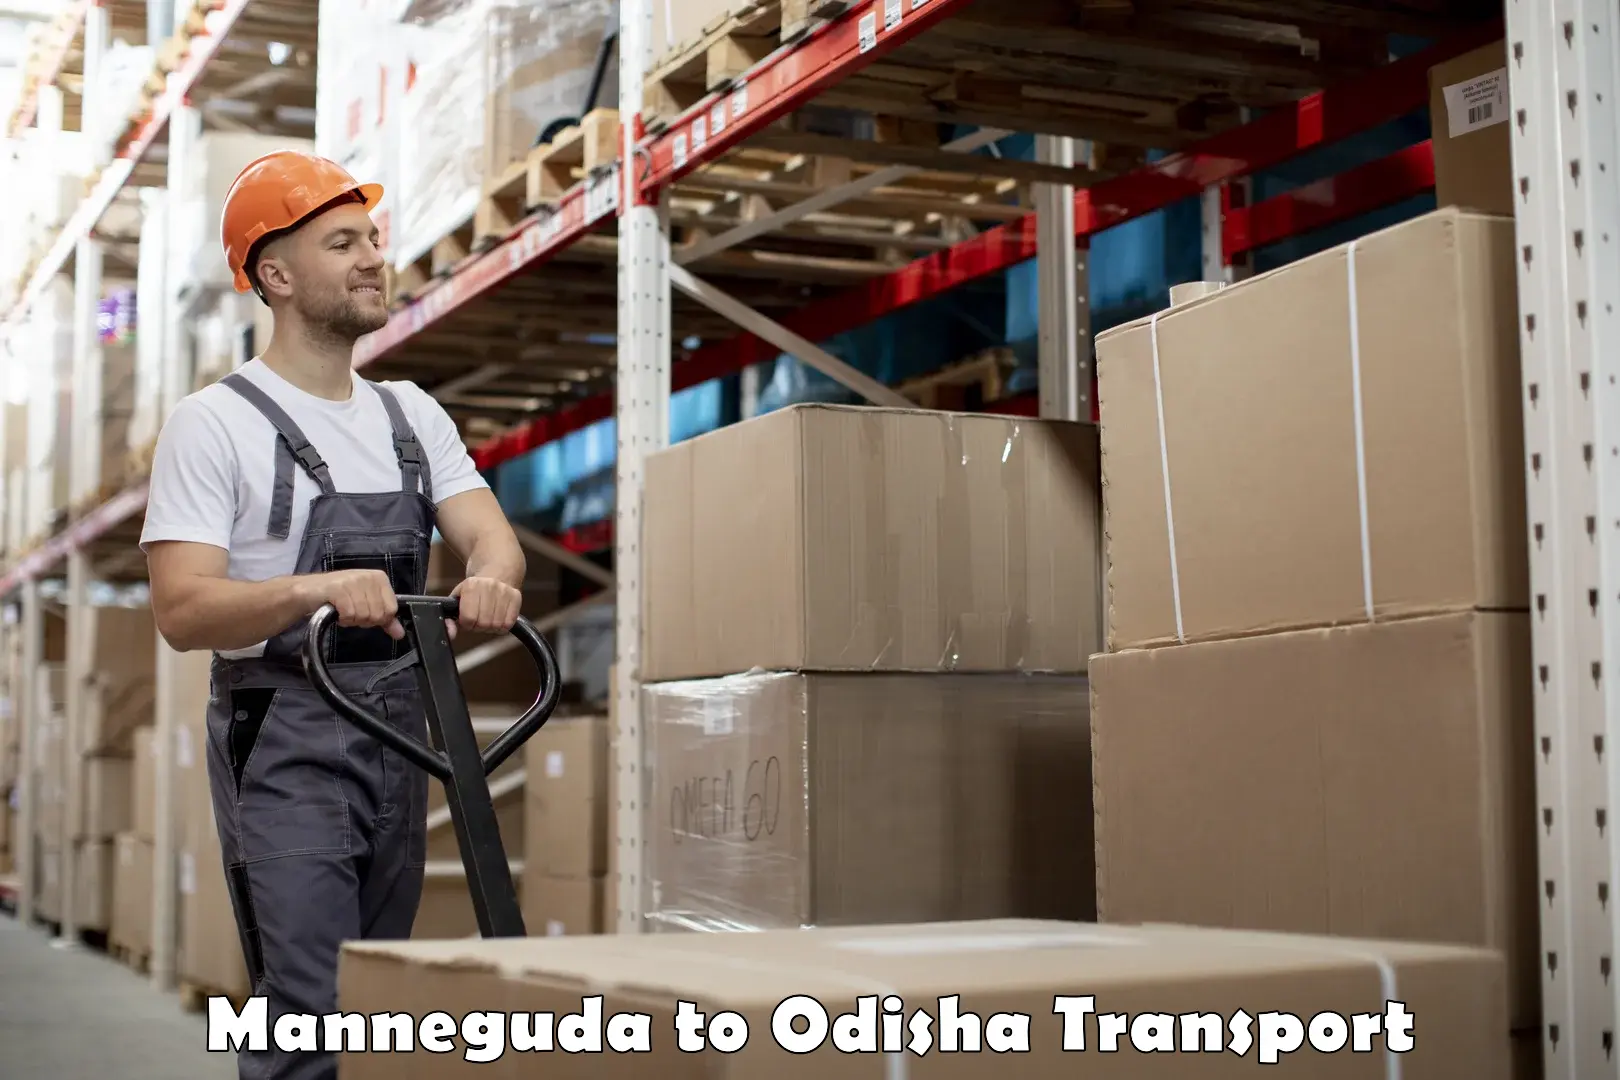 Part load transport service in India Manneguda to Kantamal